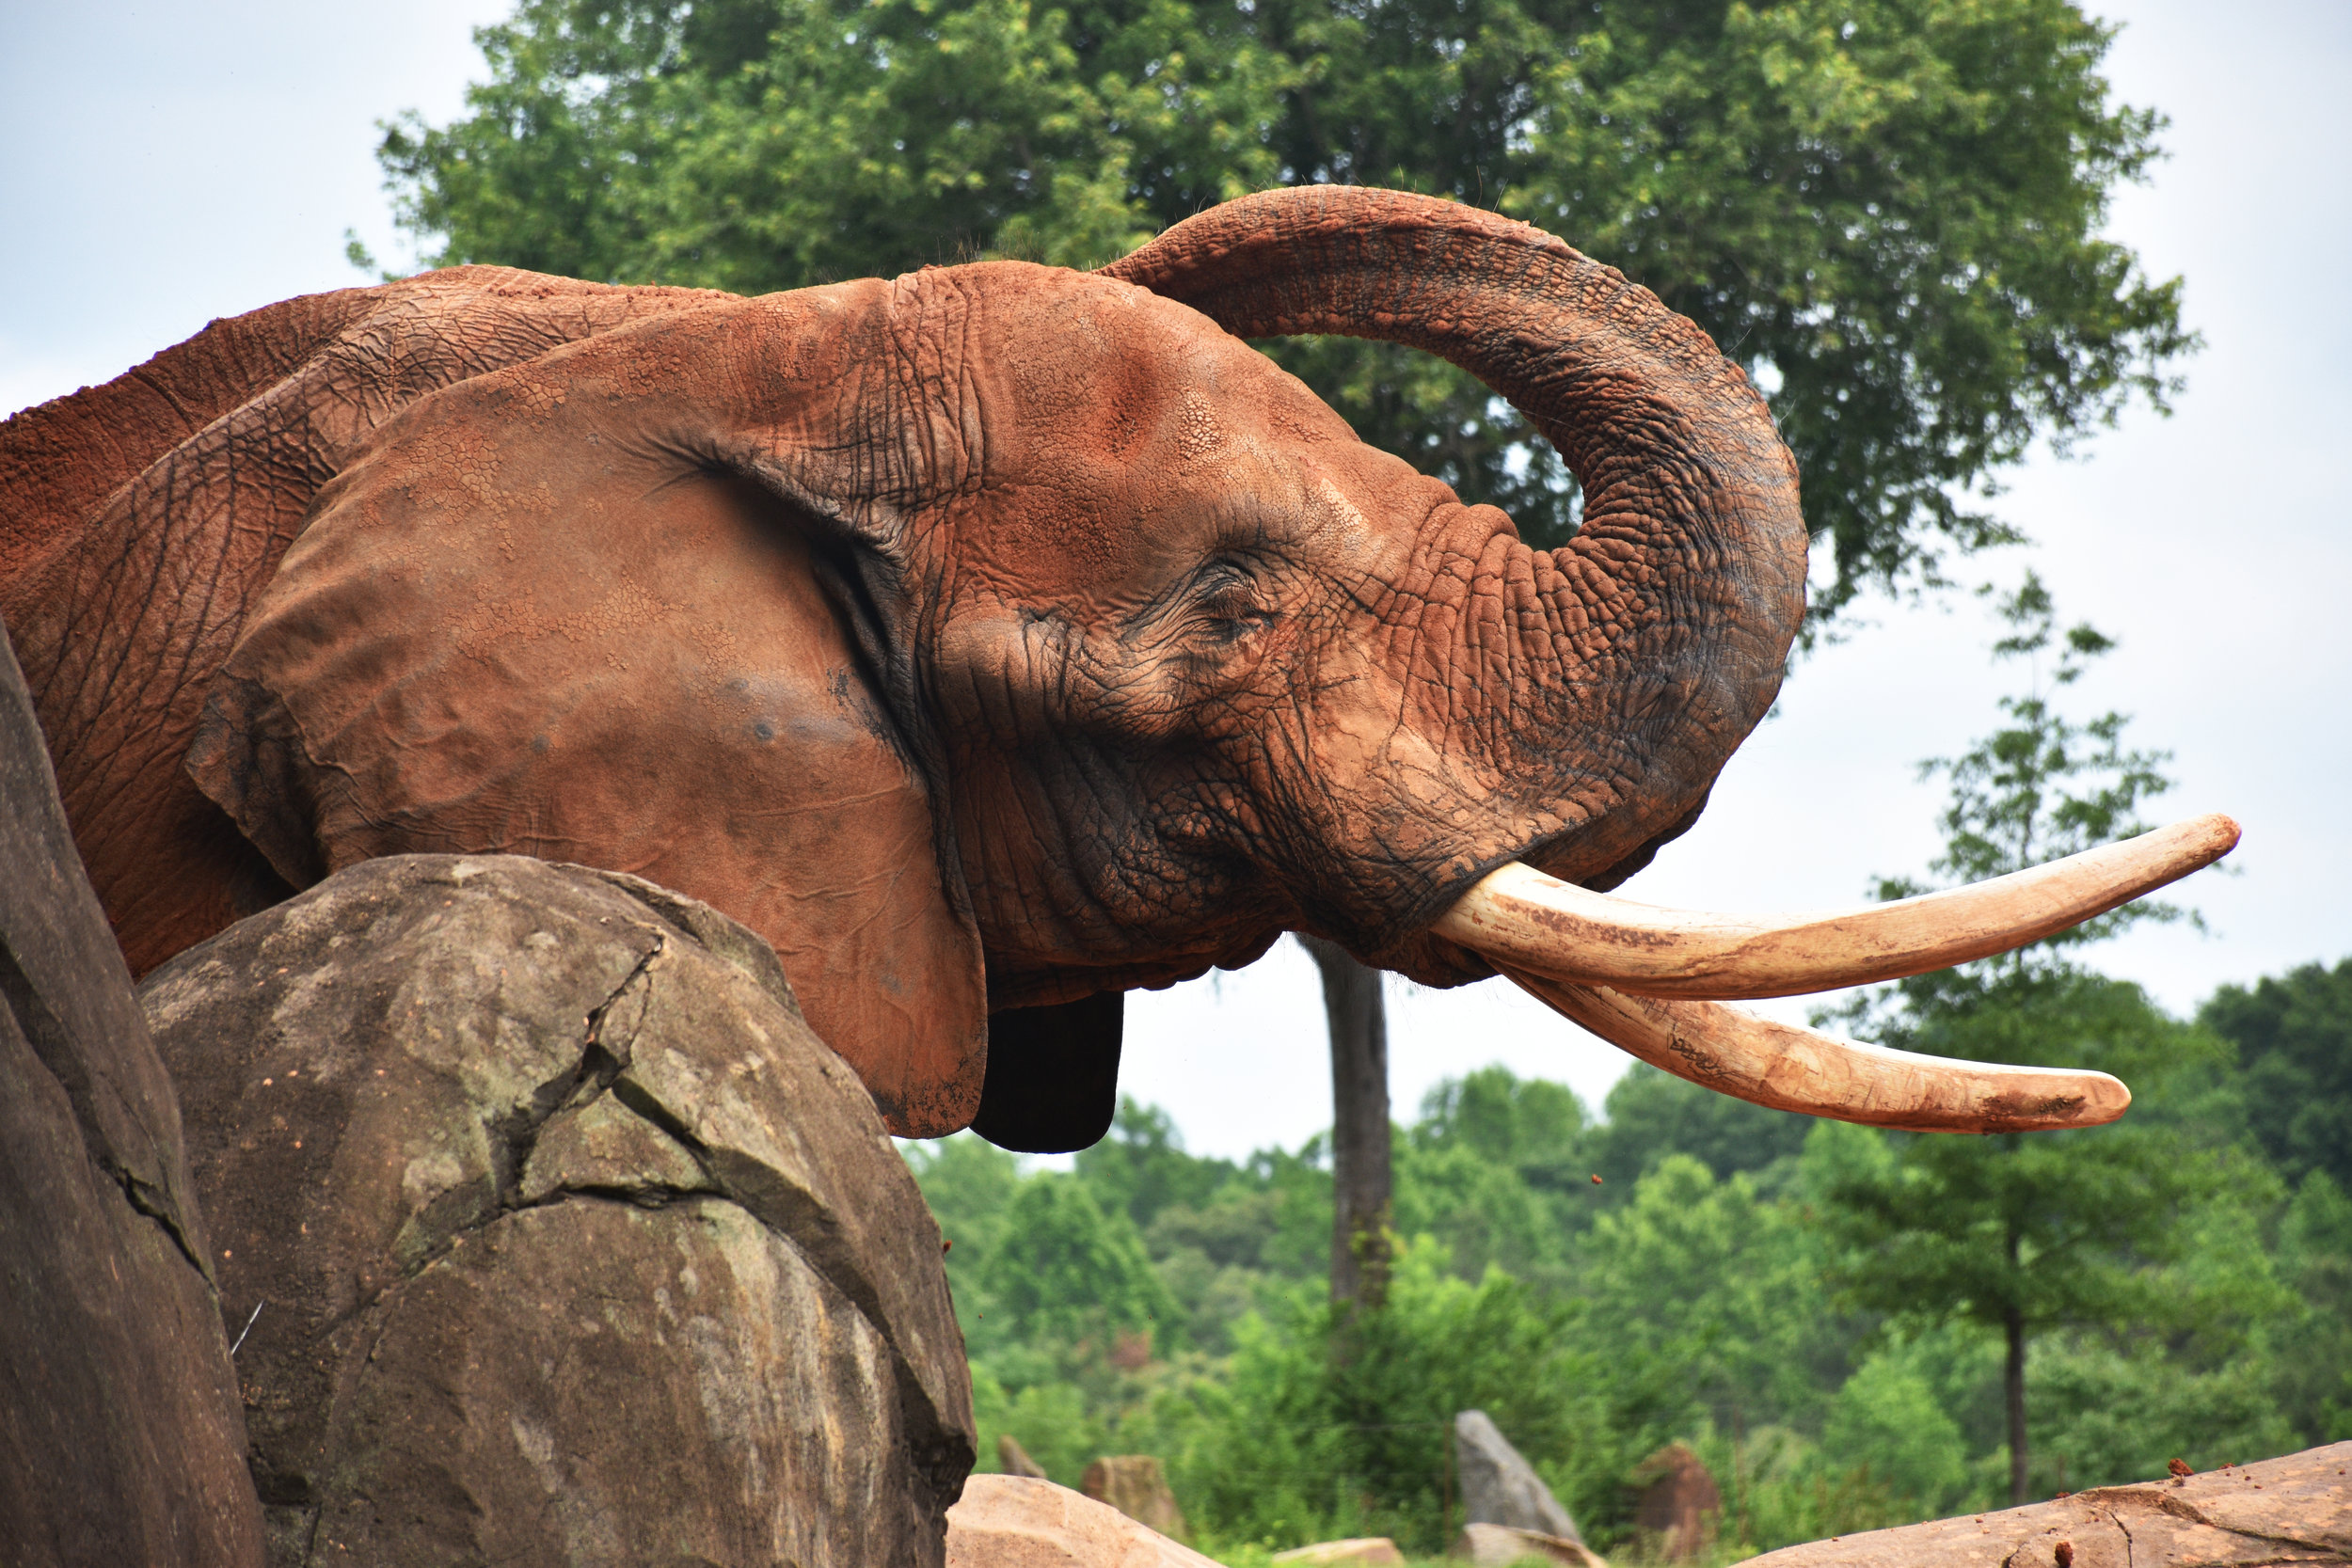 An elephant bathes itself in mud